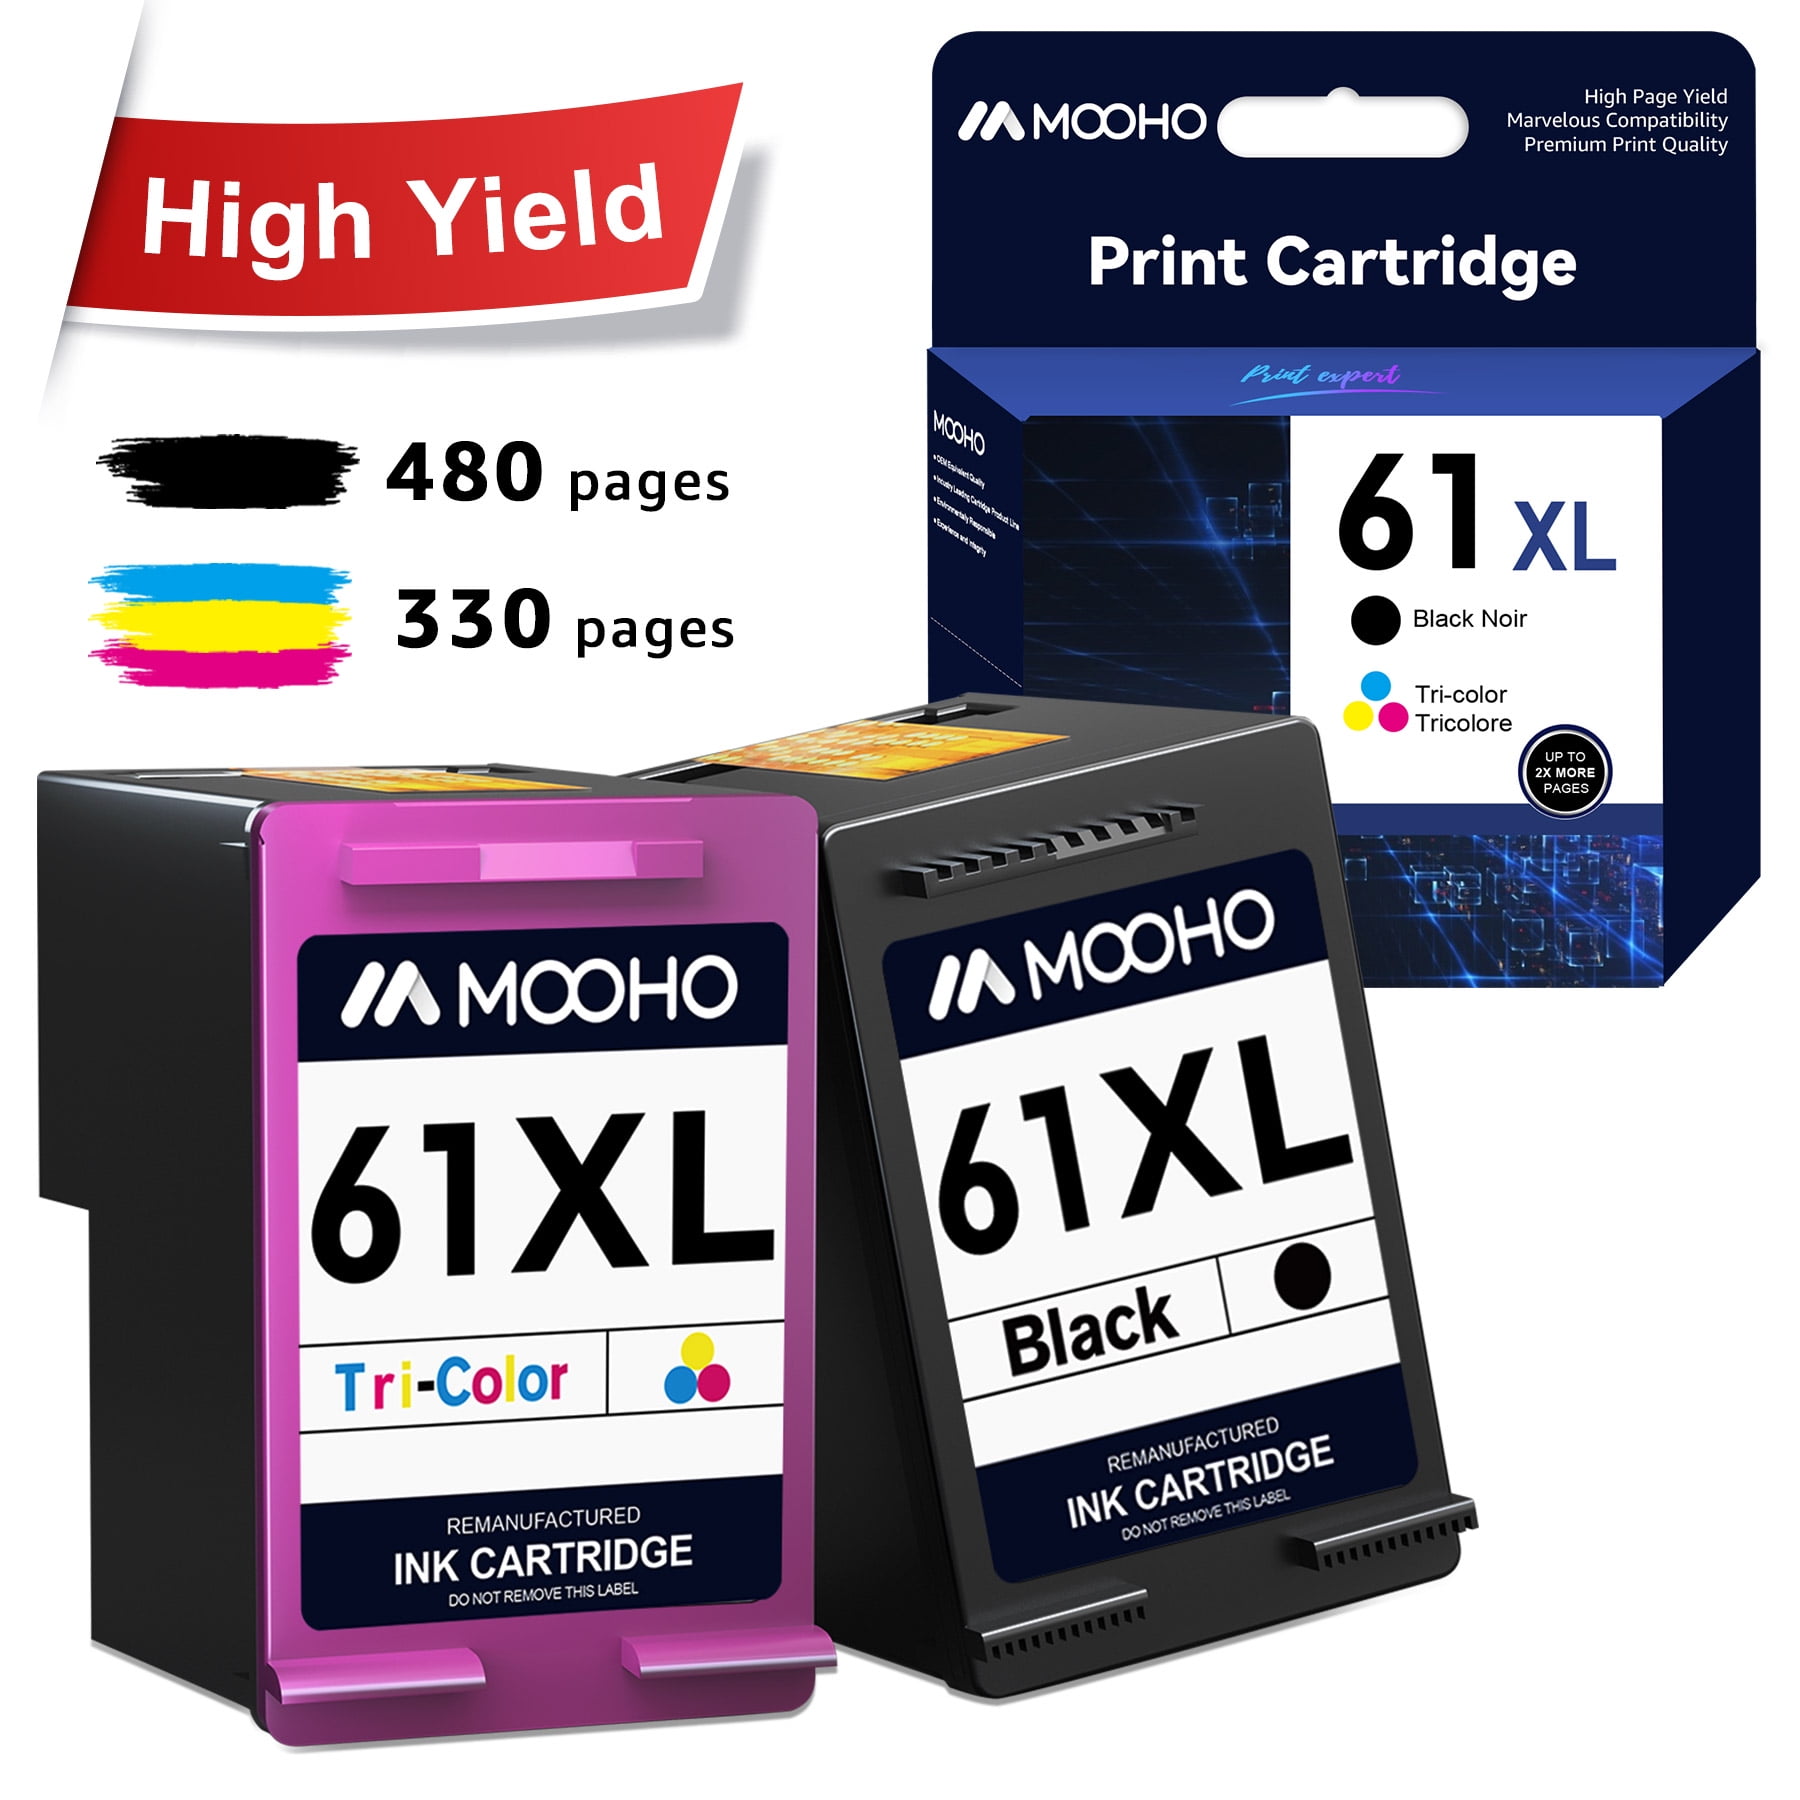 61 XL Black Ink Replacement HP 61XL Ink Cartridge Black HP Envy 4500 Deskjet 1000 1056 1510 1512 1010 1055 OfficeJet 4630 Printer,1 Pc - Walmart.com